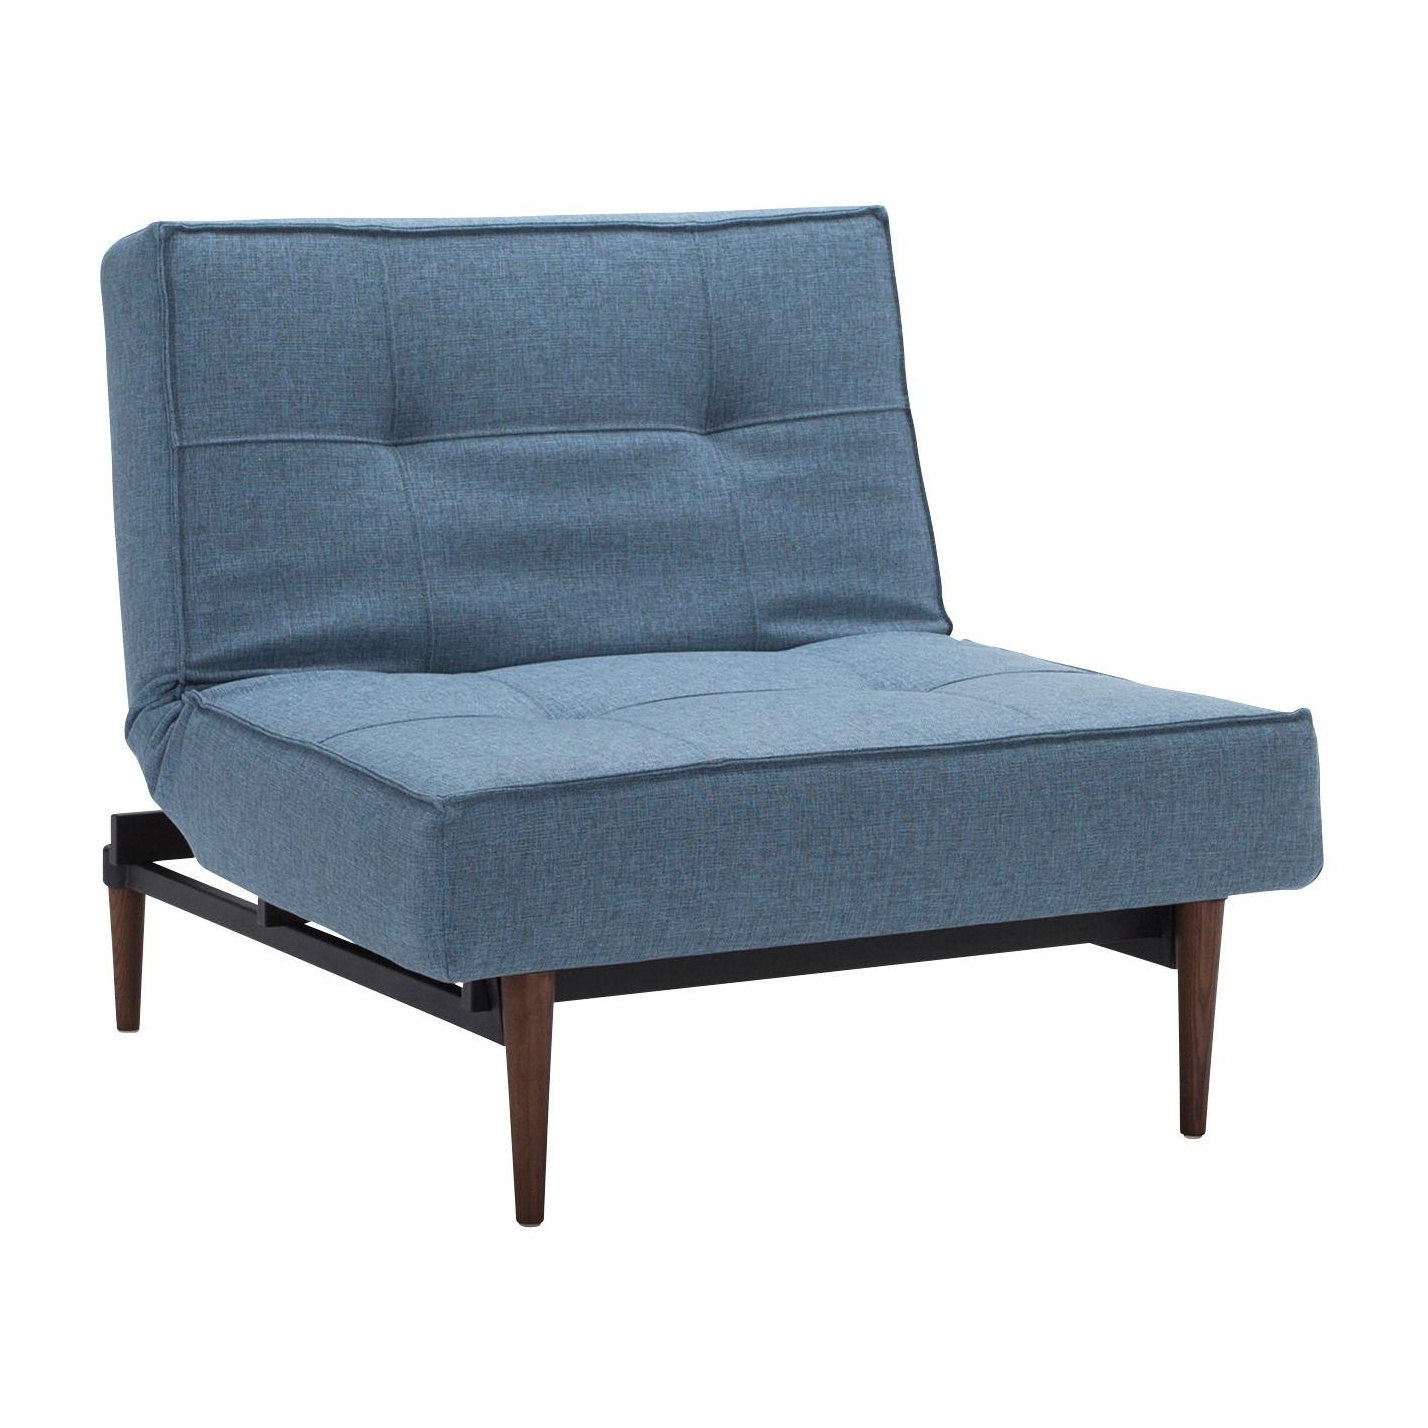 Innovation - Splitback Styletto fauteuil hout donker - lichtblauw/stof 525 Mixed Dance Light Blue/onderstel staal zwart/voeten van donker hout